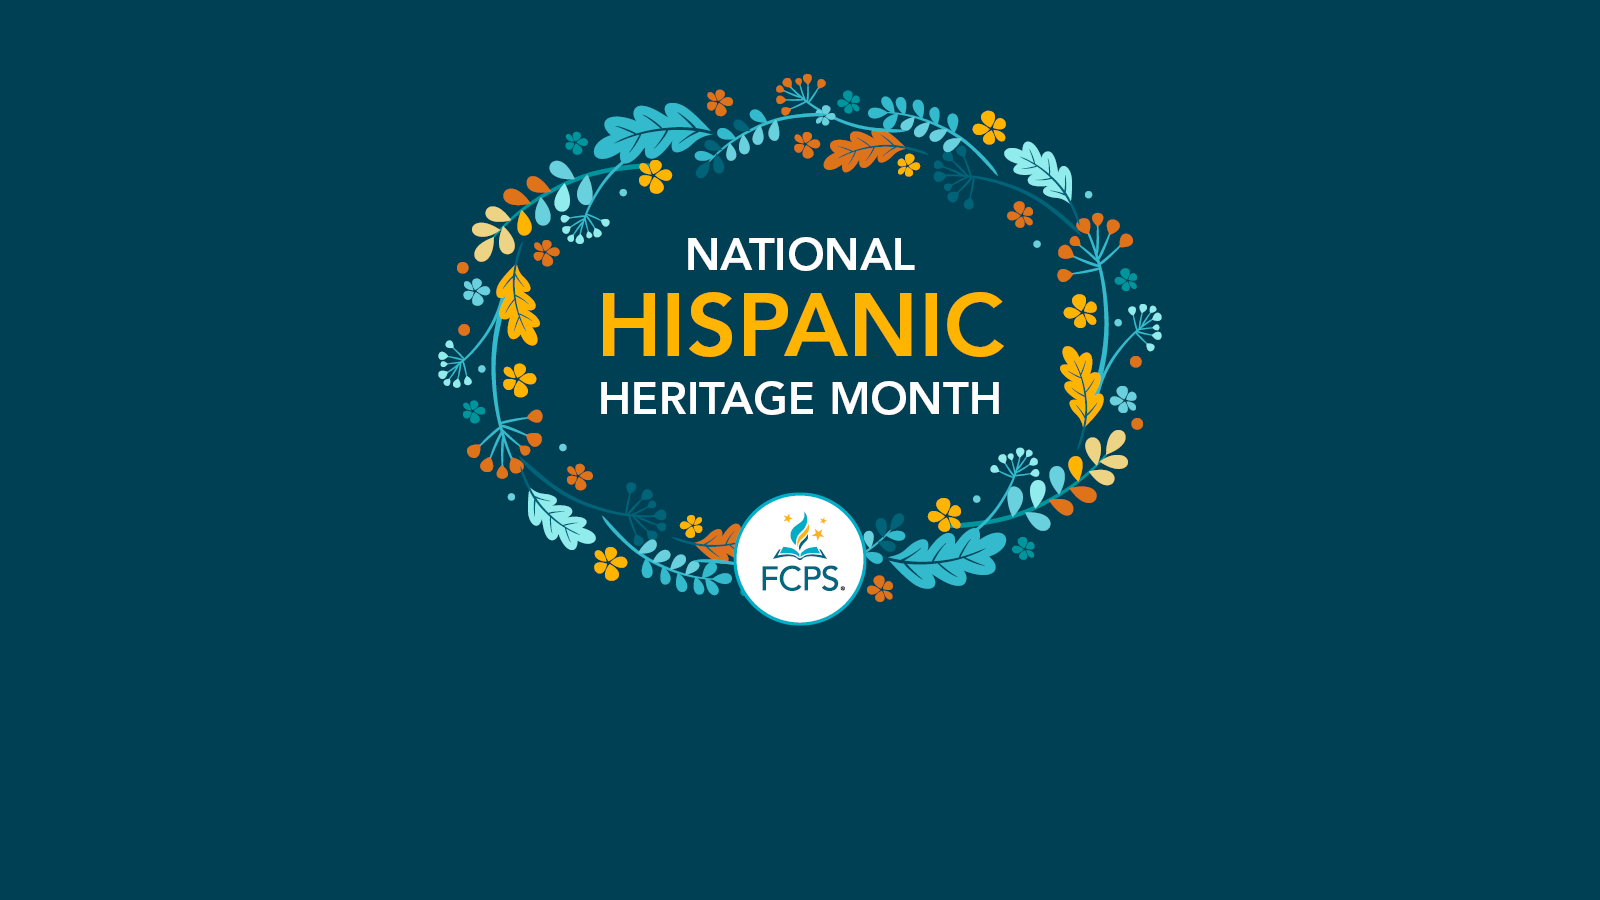 graphic that says "National Hispanic Heritage Month"